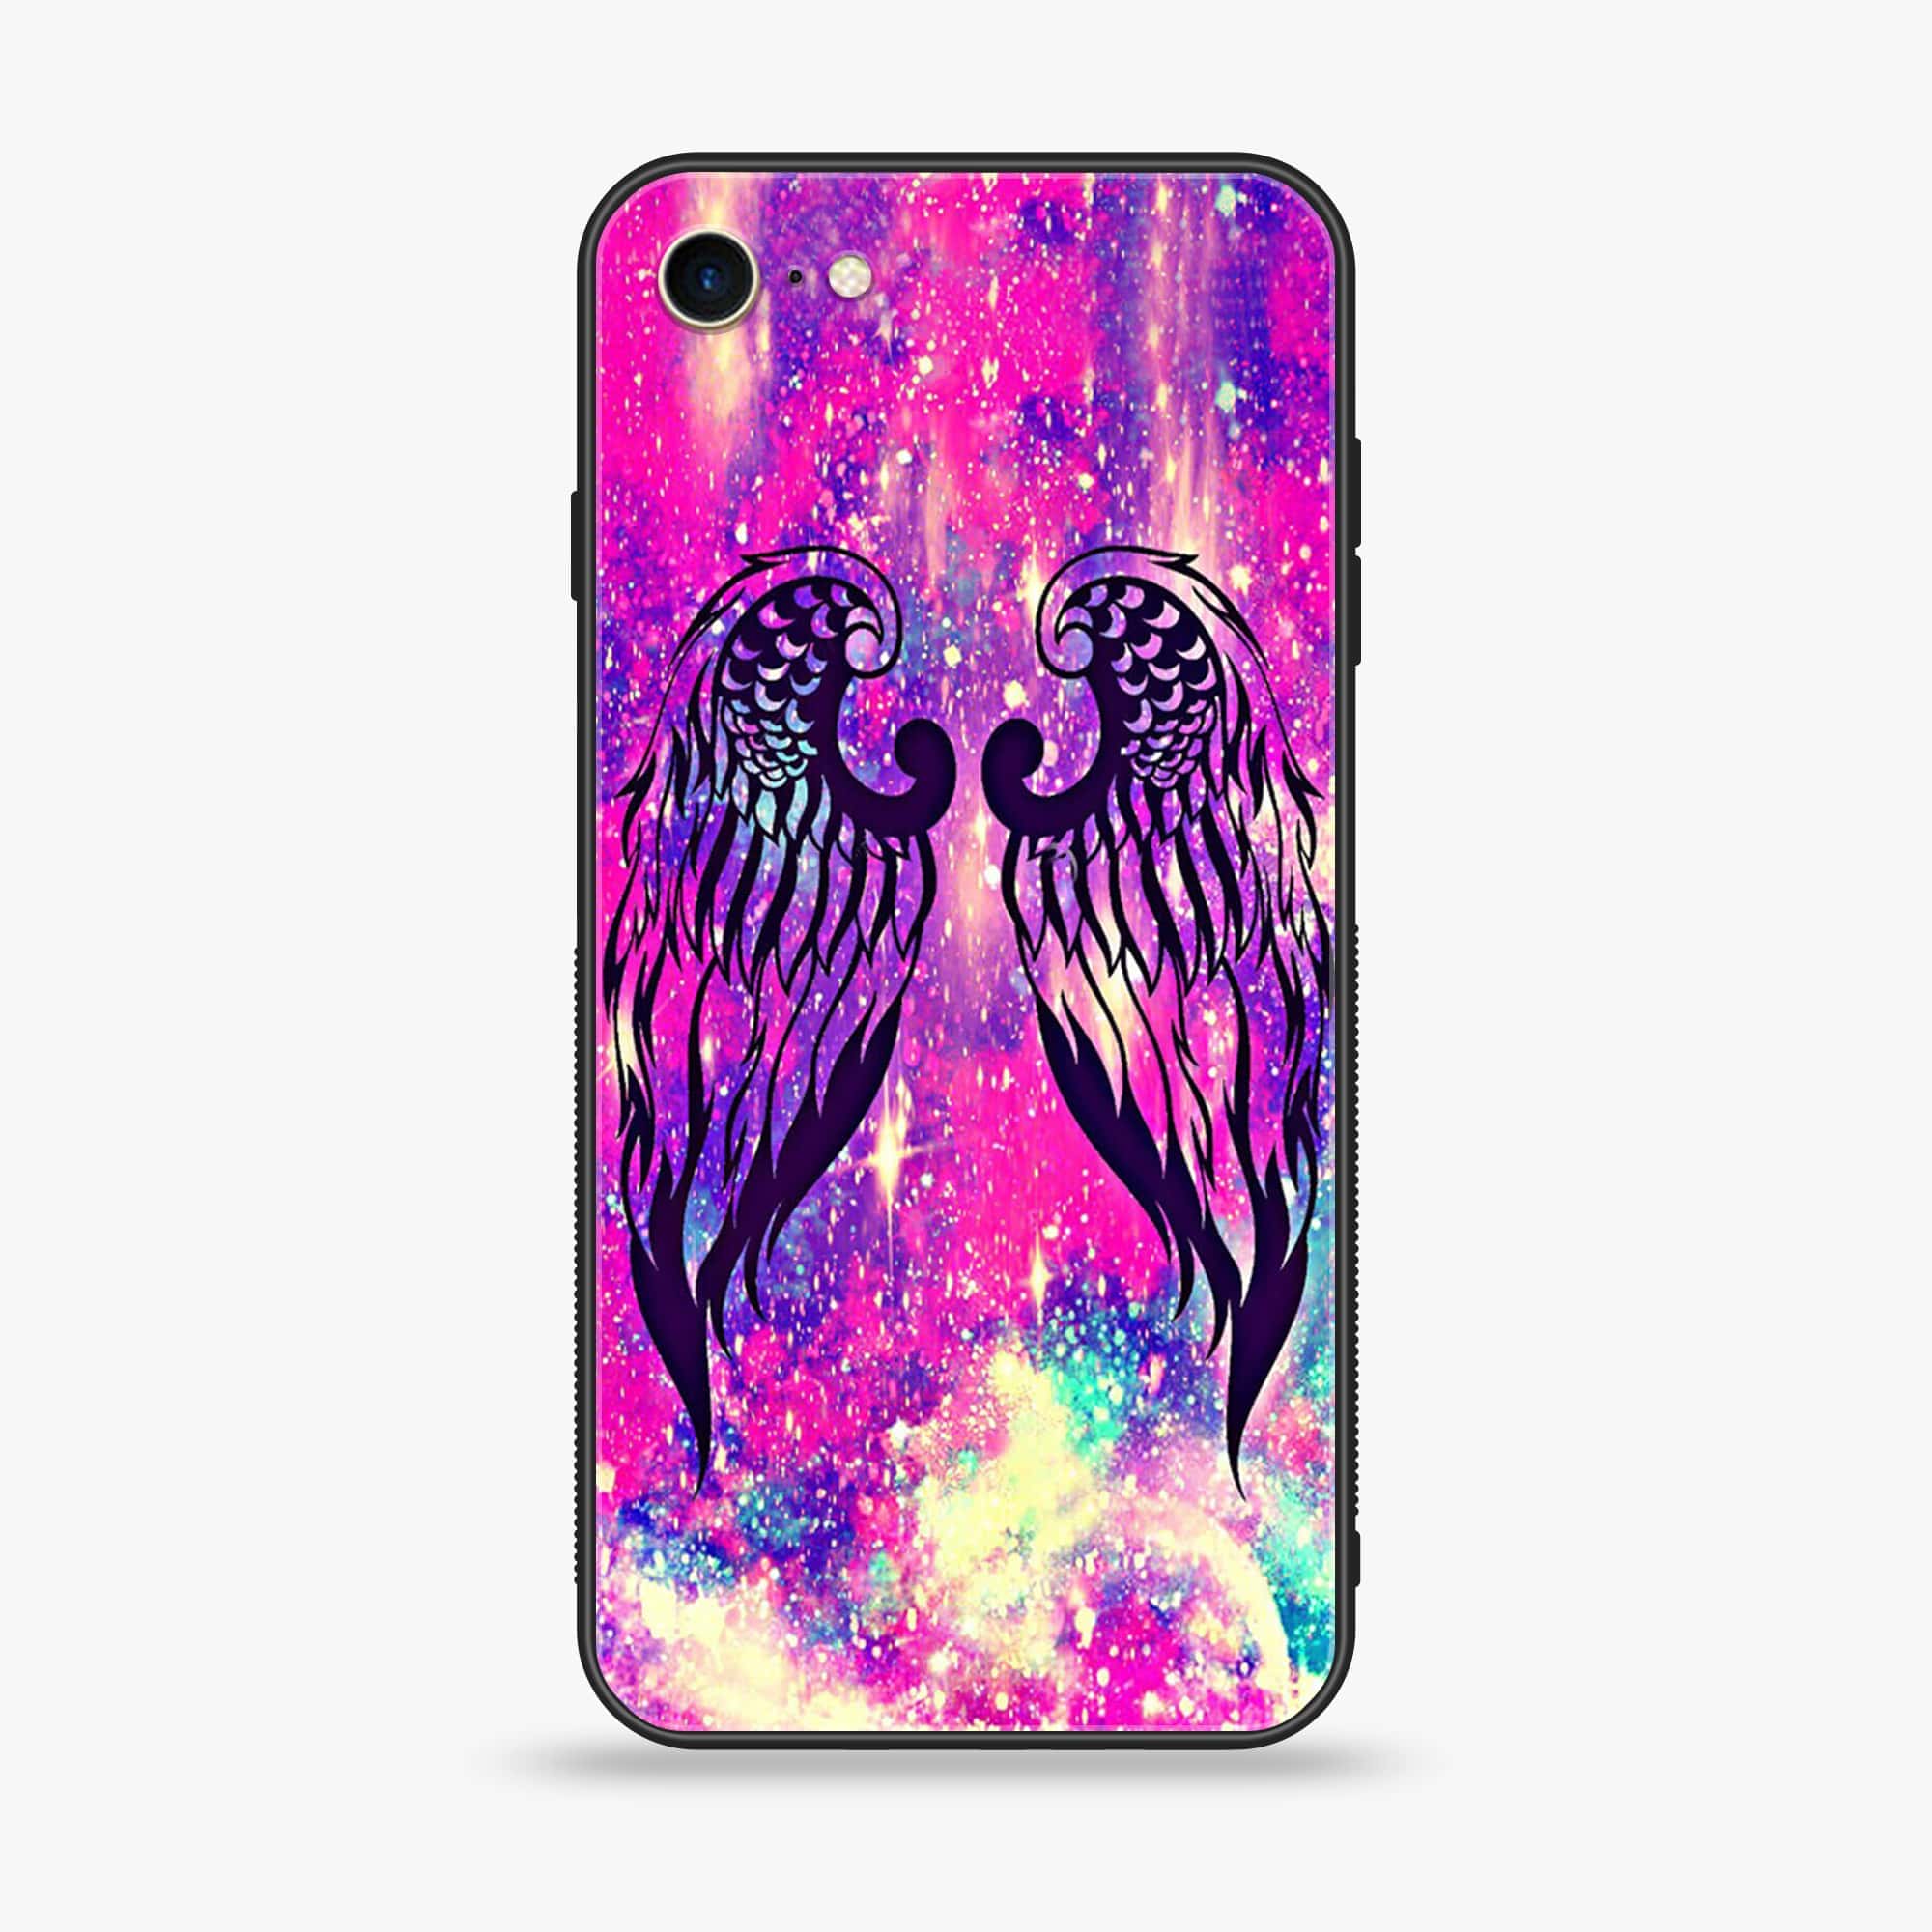 iPhone 6 - Angel wings Series - Premium Printed Glass soft Bumper shock Proof Case